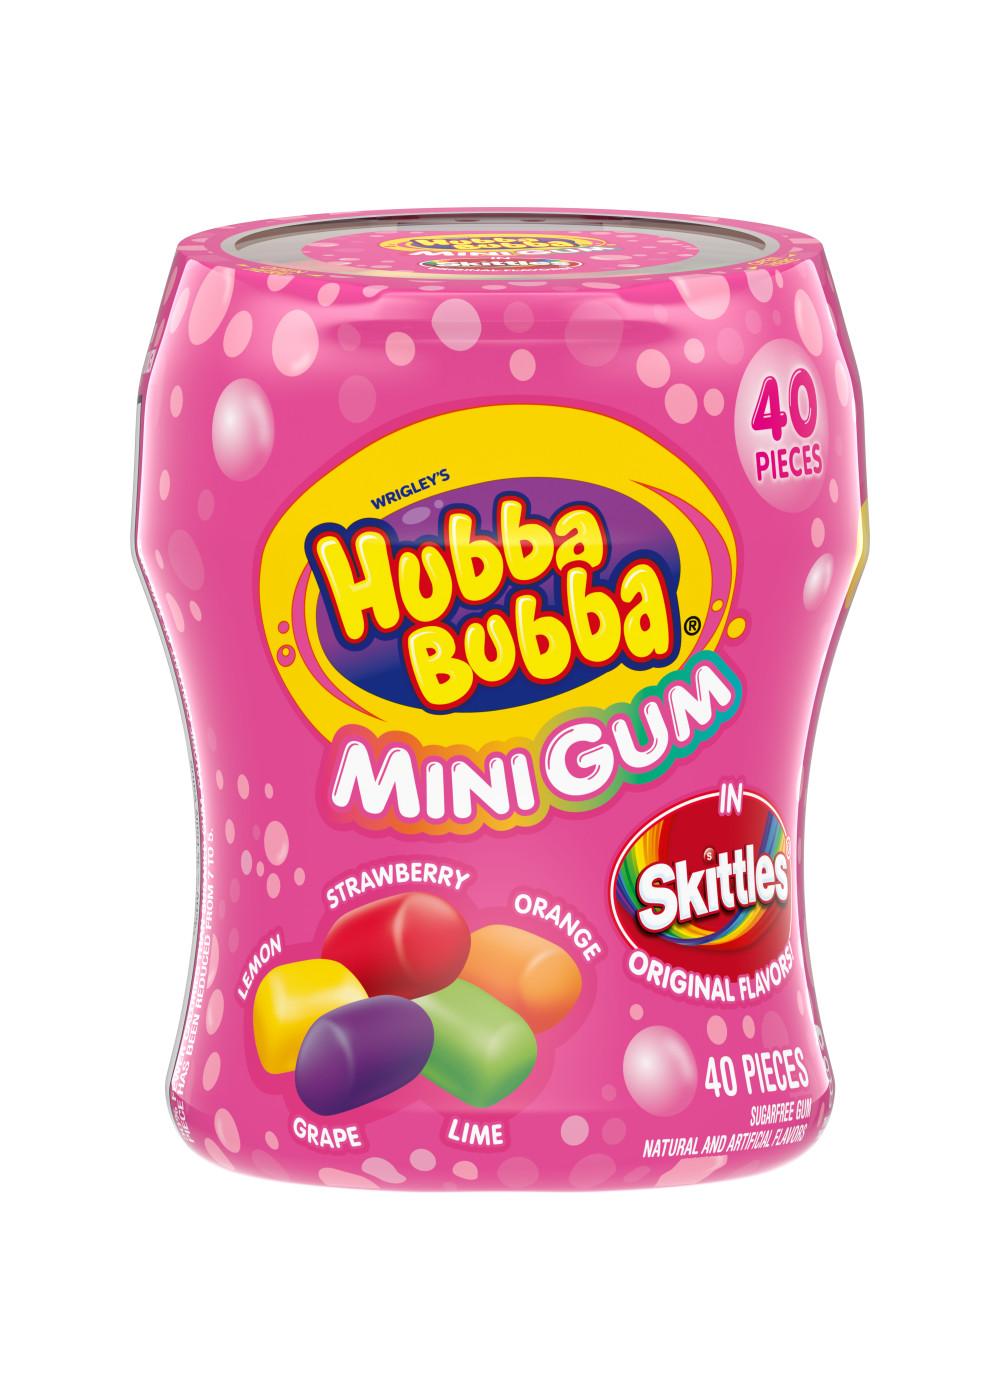 Hubba Bubba Skittles Flavored Mini Gum; image 1 of 2